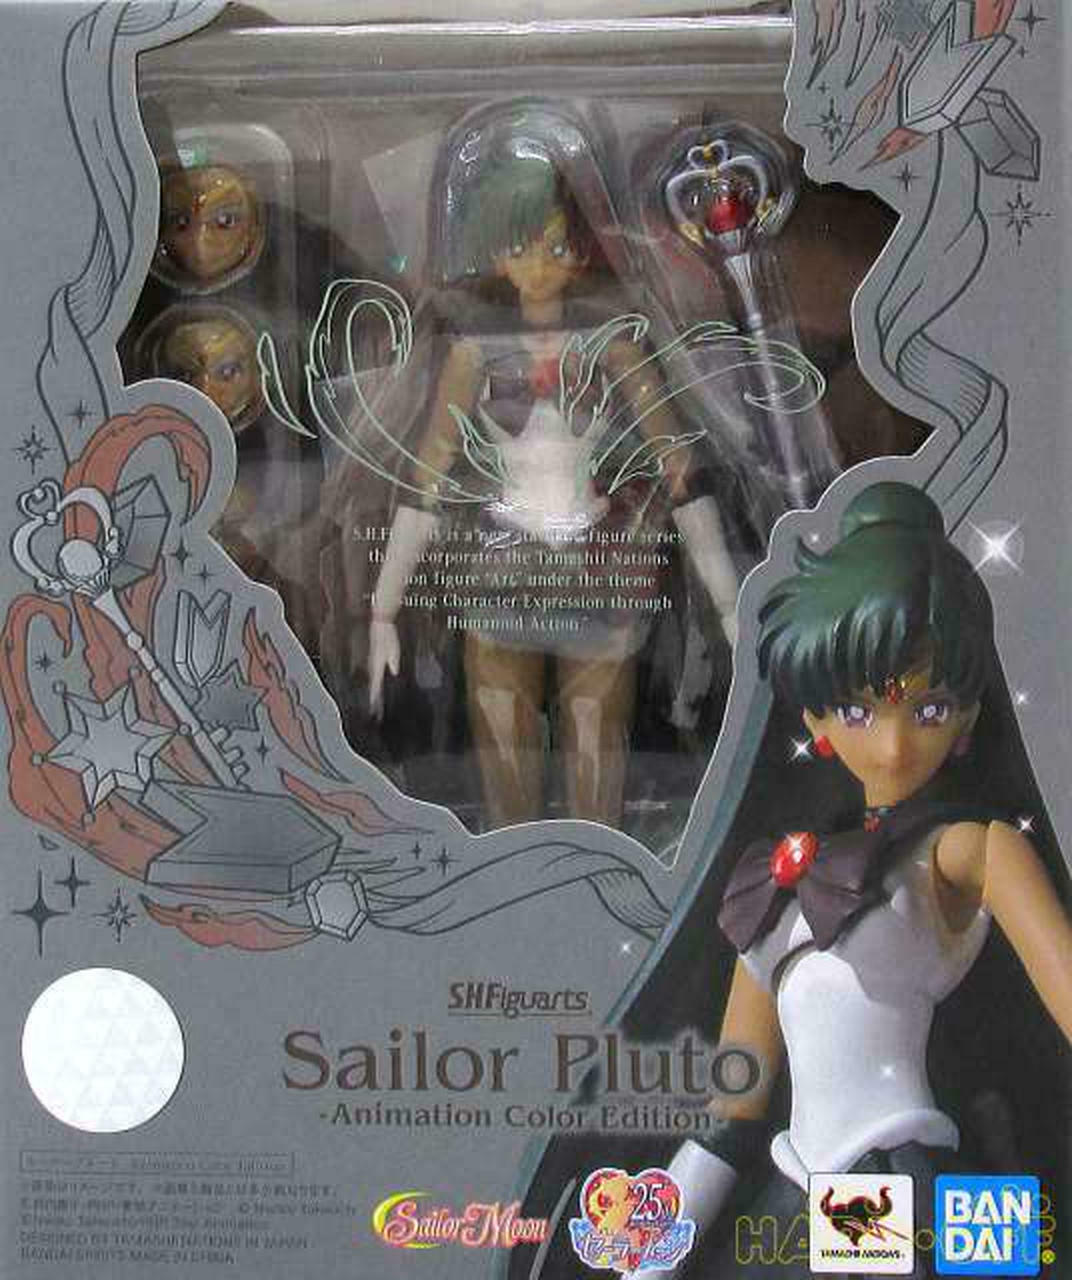 Sailor Pluto Figure, S H Figuarts, Animation Color Edition, 25th Anniversary, Sailor Moon, Bandai